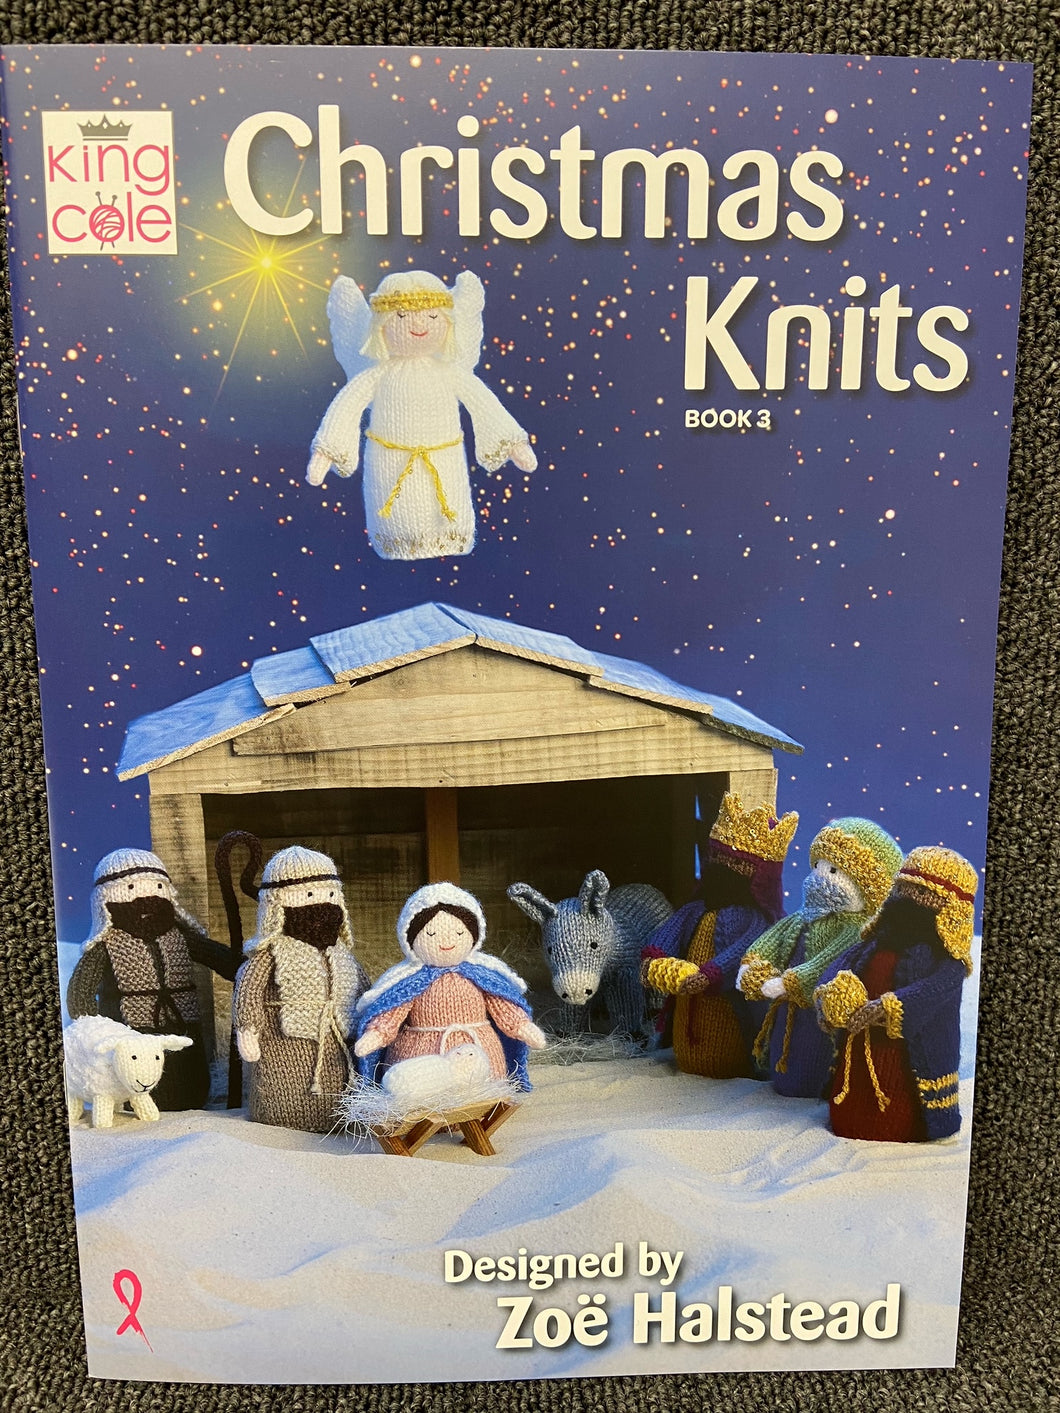 fabric shack knitting crohet knit yarn wool pattern zoe halstead king cole christmas knits book 3 nativity wreath toys lights